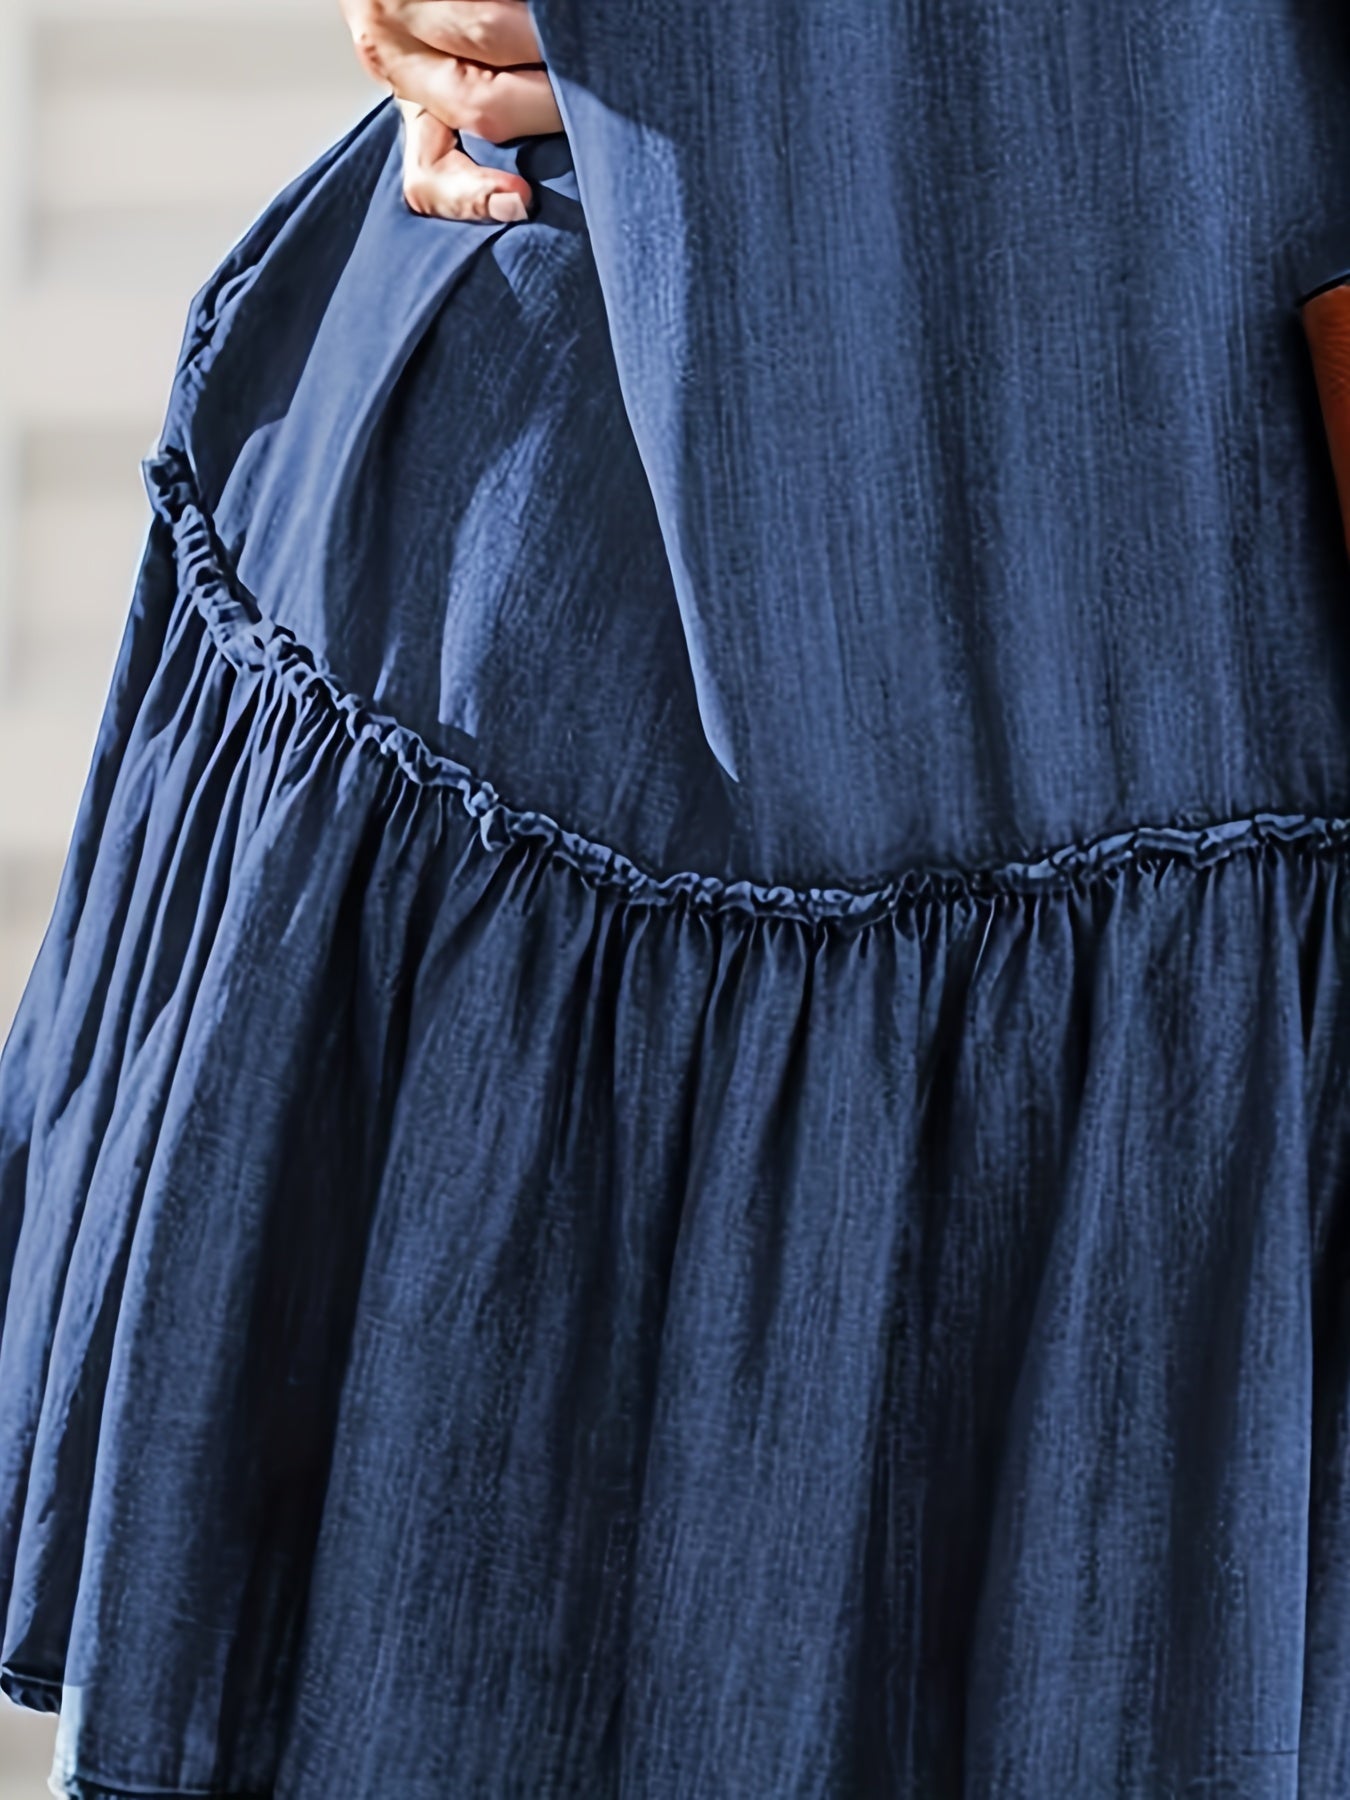 「binfenxie」Blue Long Sleeves Denim Dress, Loose Fit Single-Breasted Button Fashion Denim Dress, Women's Denim Clothing